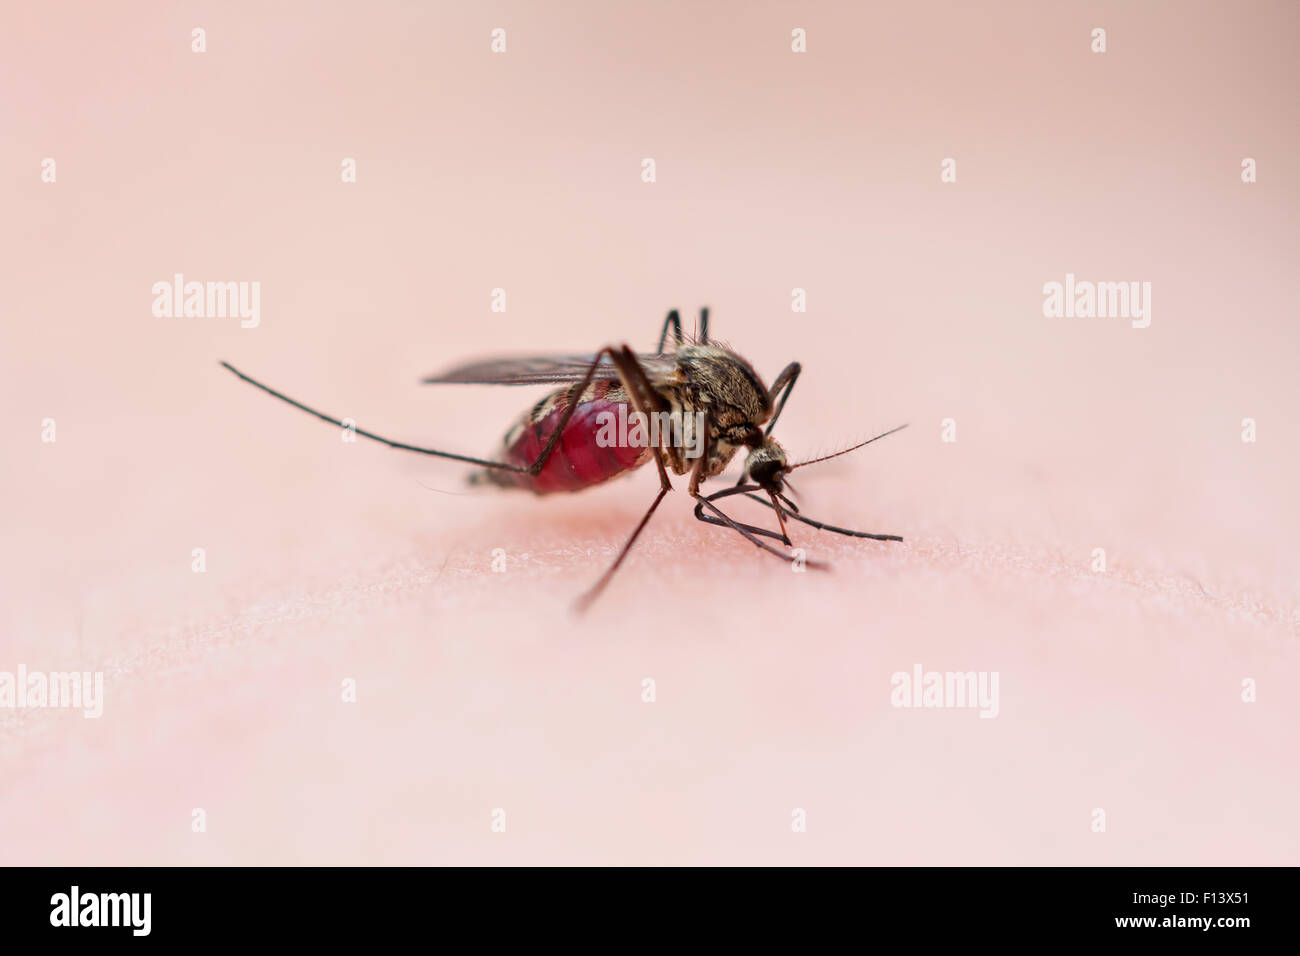 Mosquito aspirare sangue umano. Foto Stock